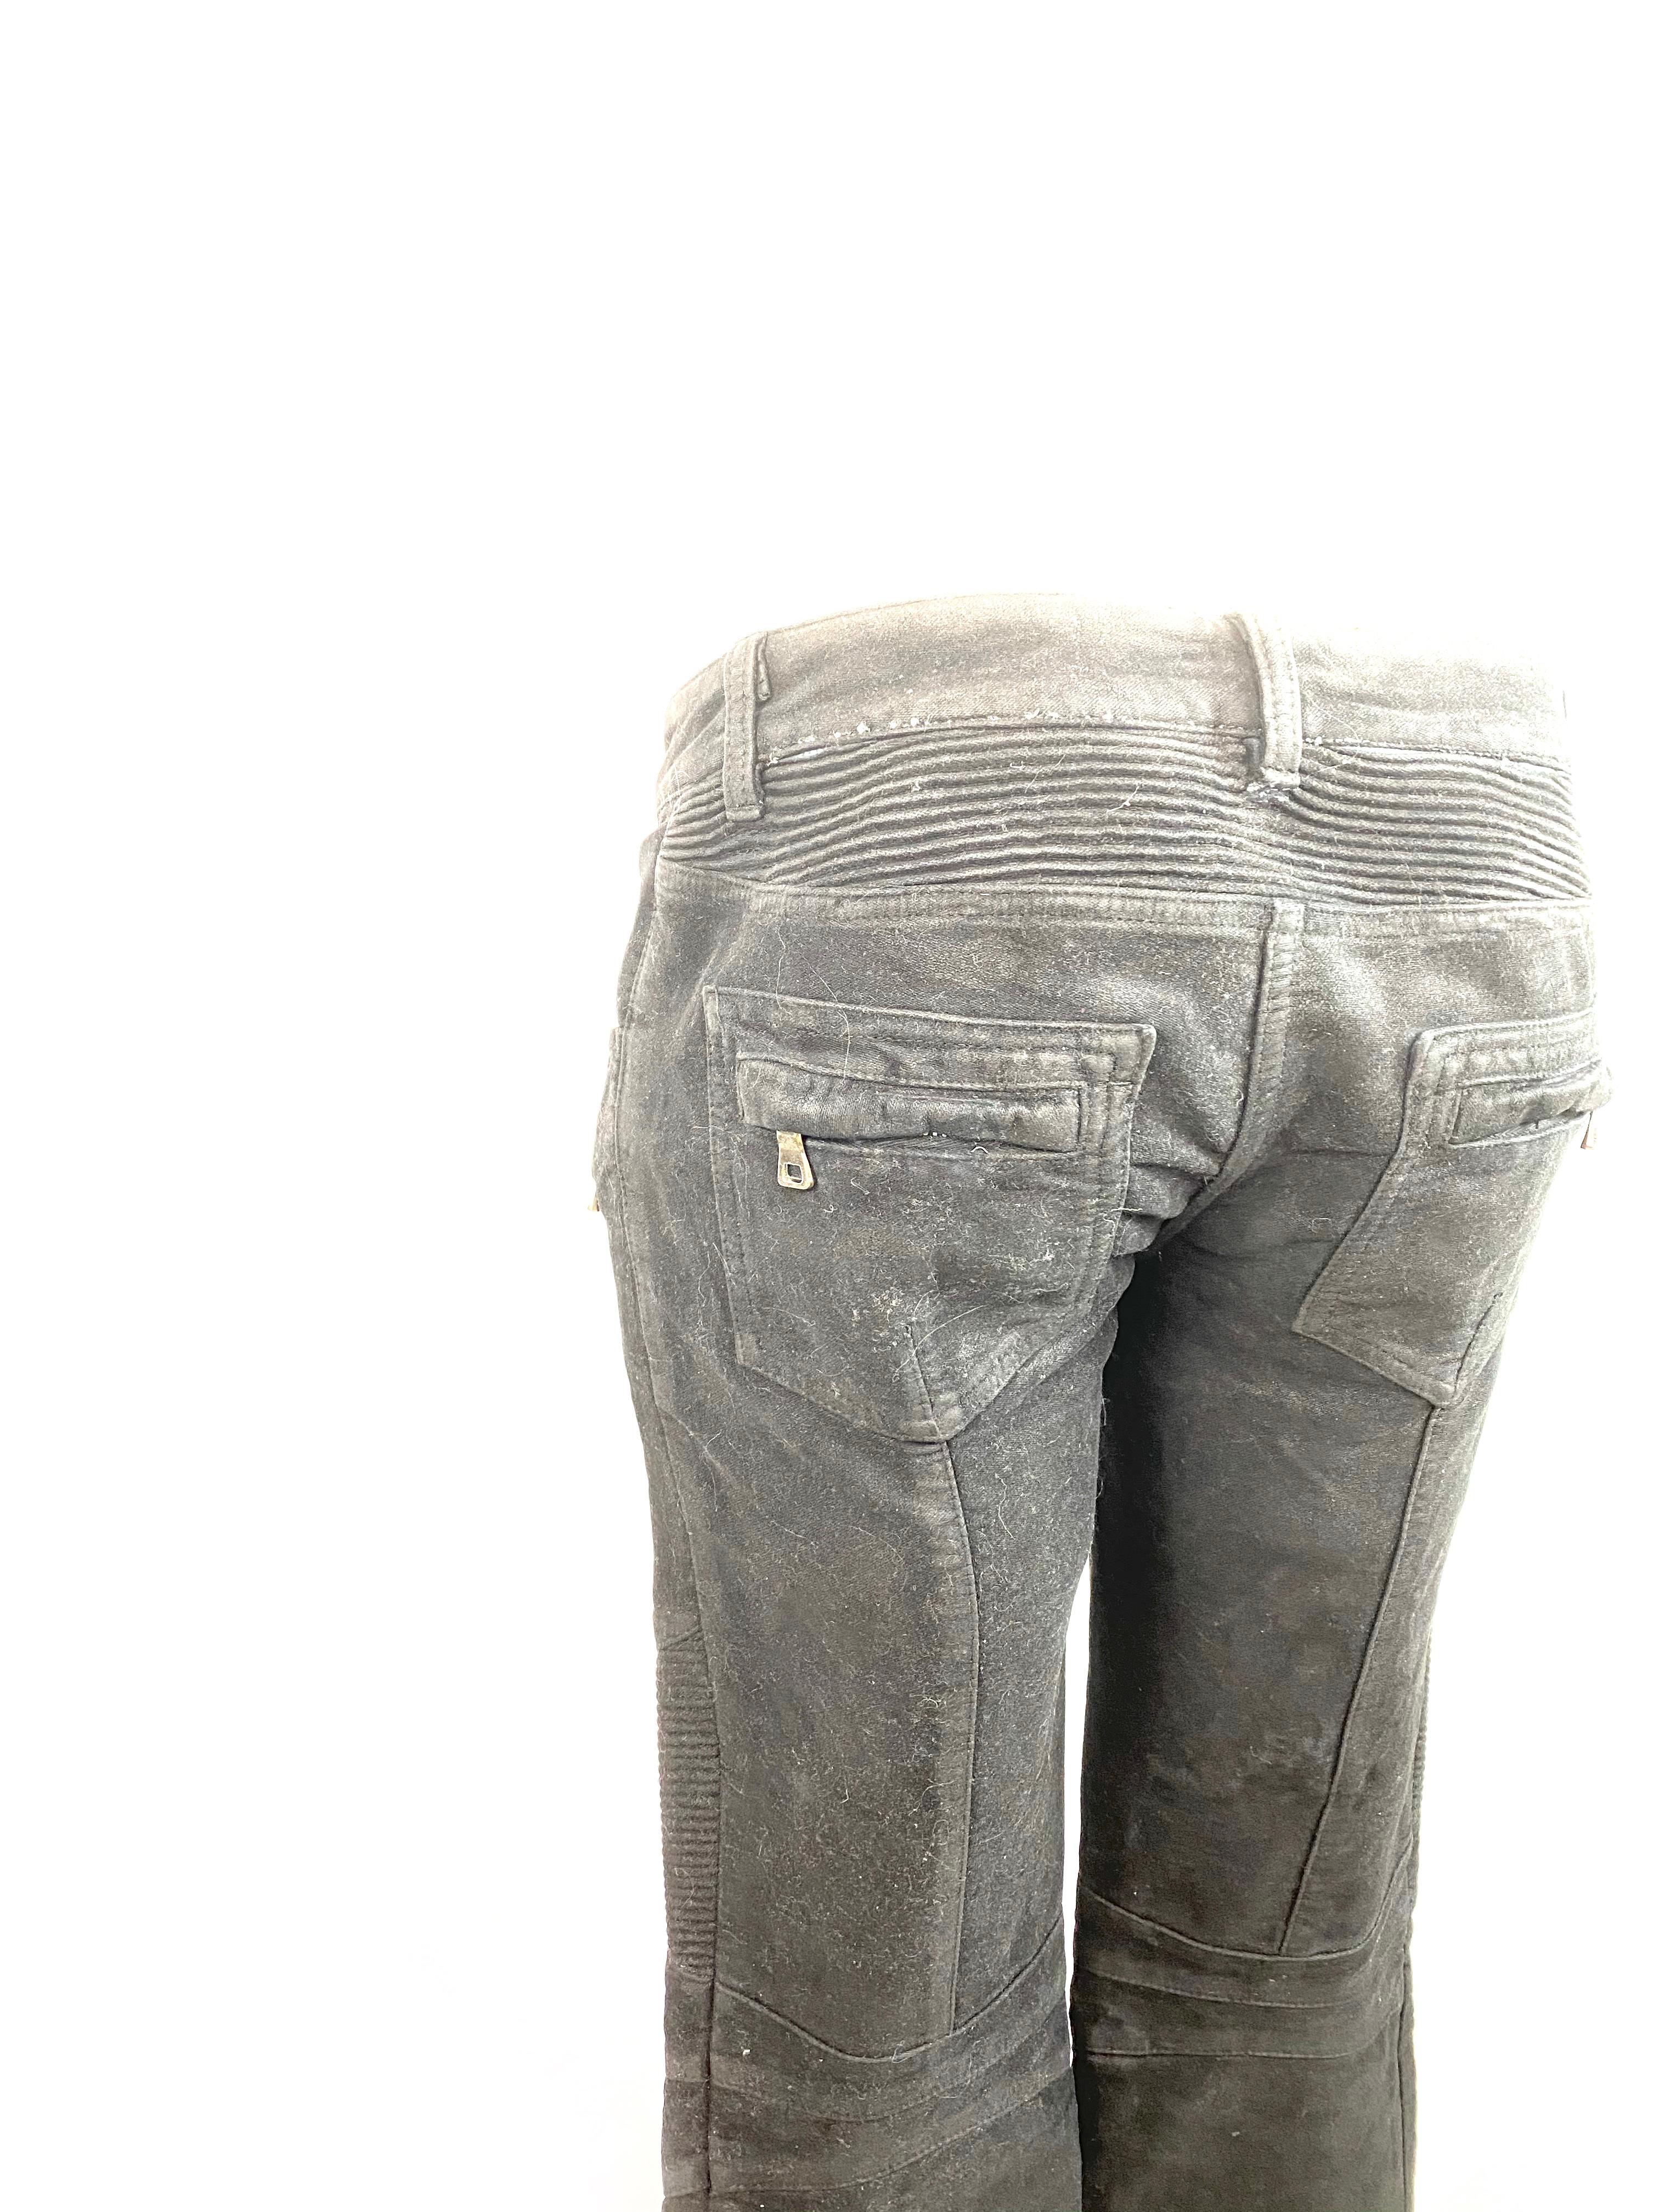 Balmain Black Suede Flare Jeans Pant Size 40 For Sale 2